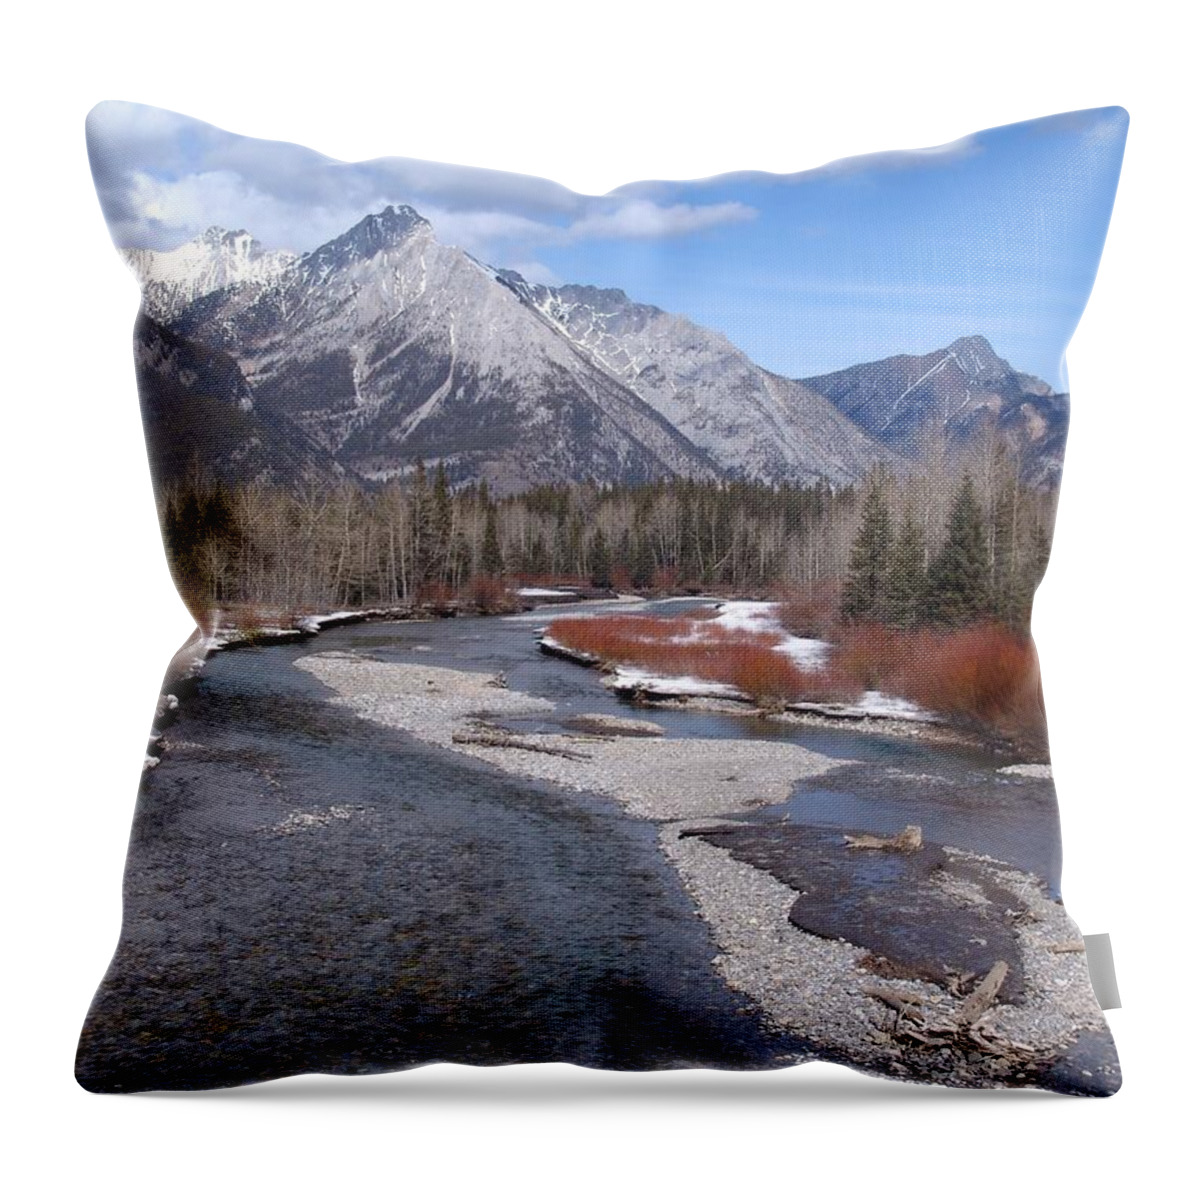 Landscape Throw Pillow featuring the photograph Kananaskis River - Lougheed Provincial Park, Kannanaskis, Alberta by Ian McAdie